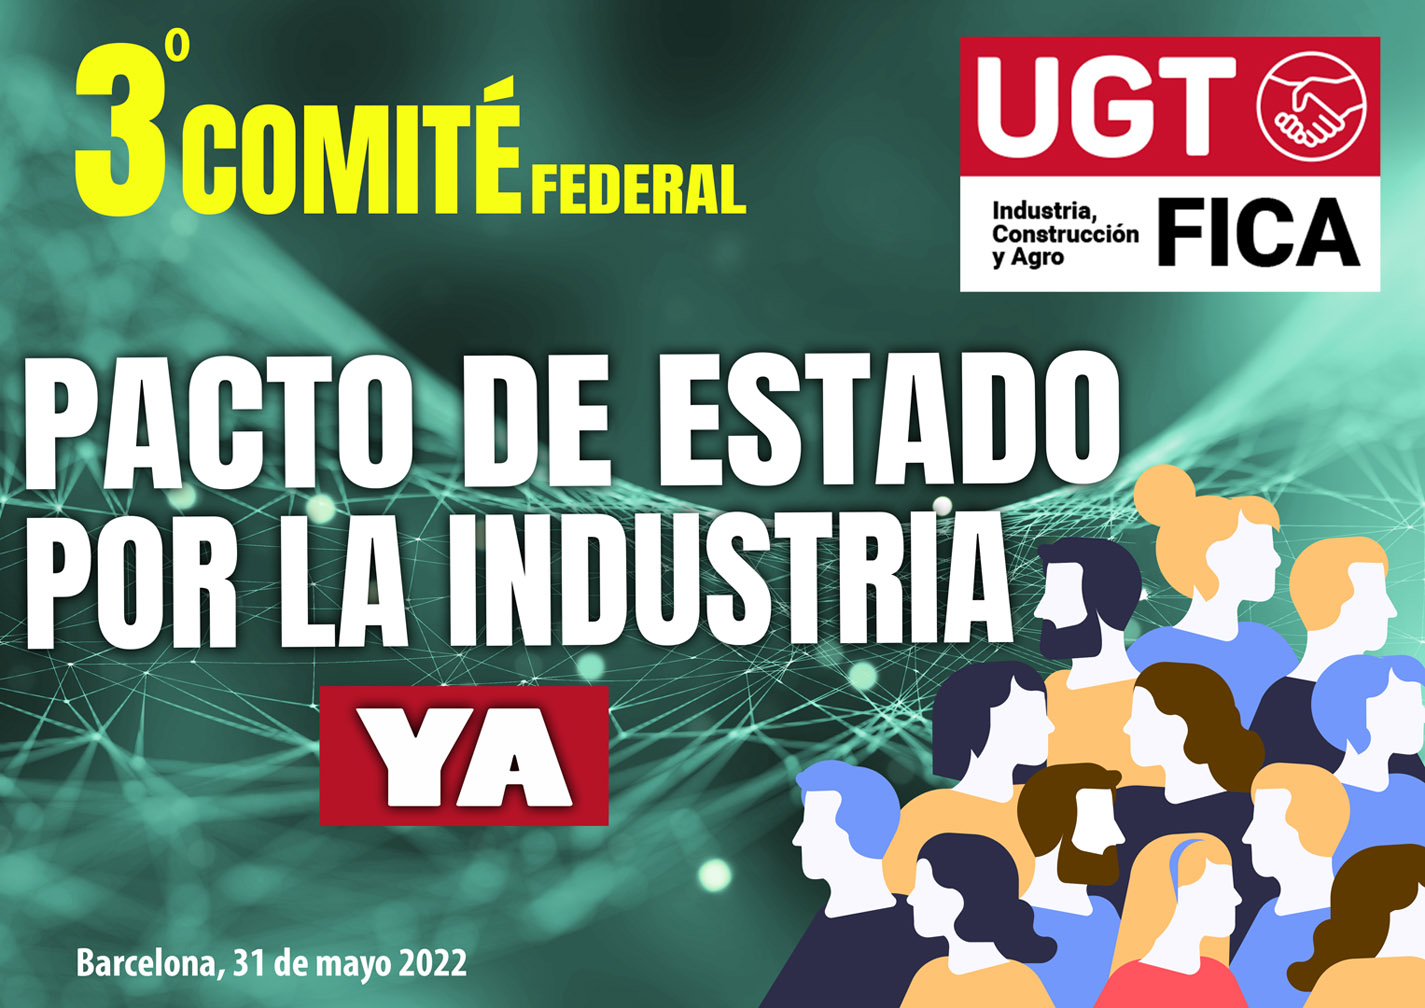 UGT FICA celebra mañana en Barcelona su 3º Comité Federal